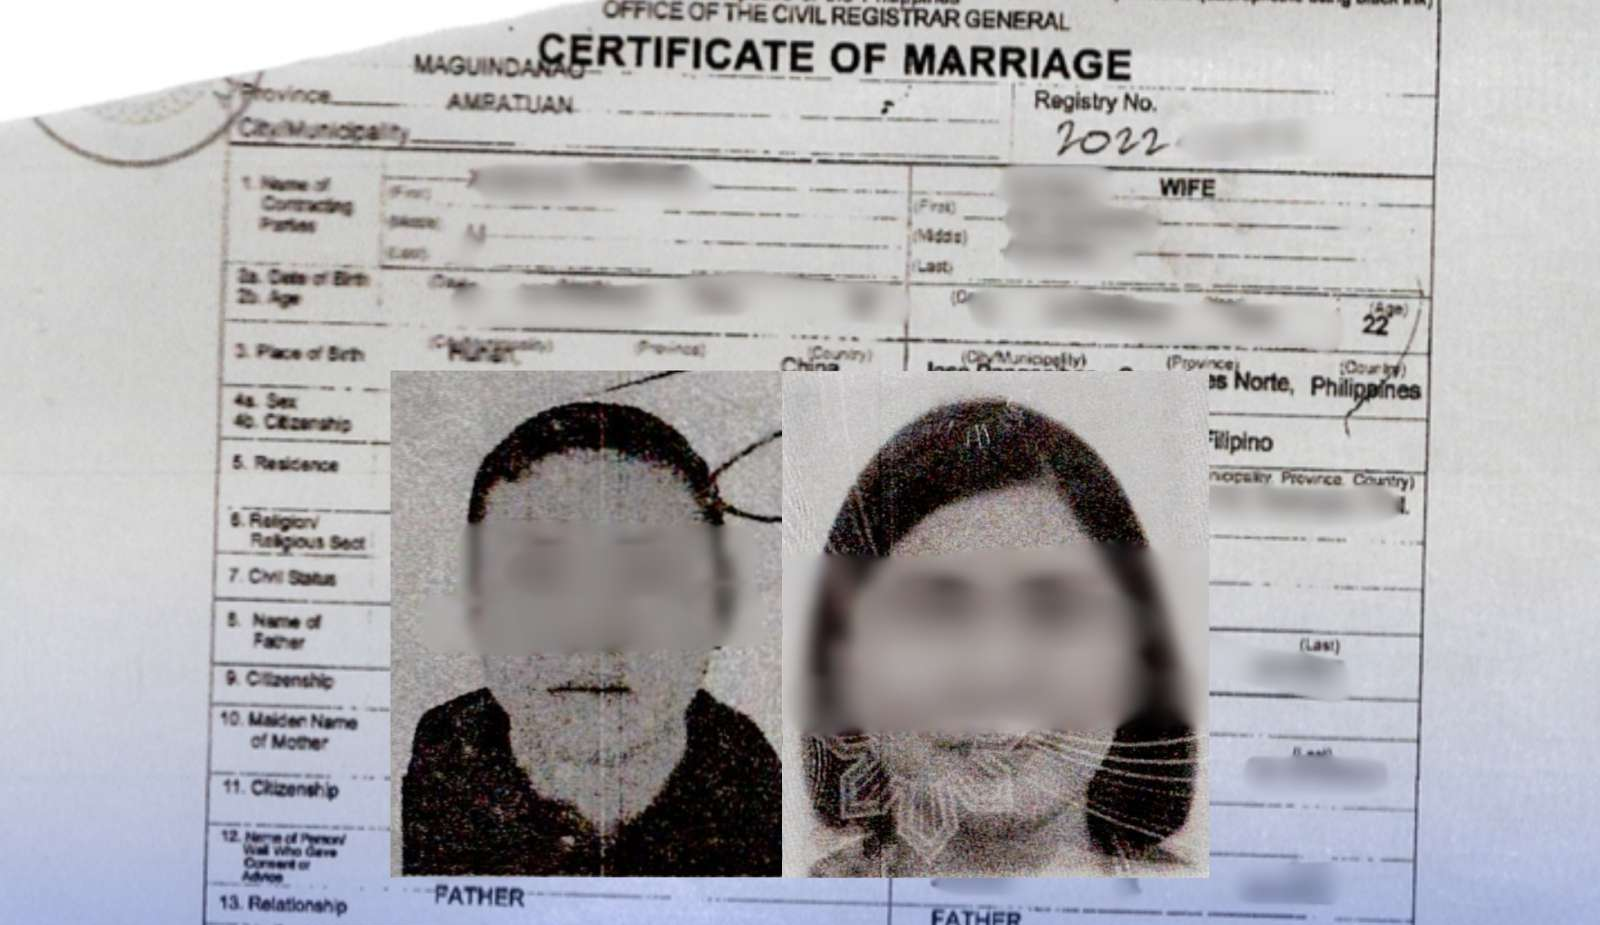 Immigration officials warn against ‘mail-order bride’ trafficking scheme